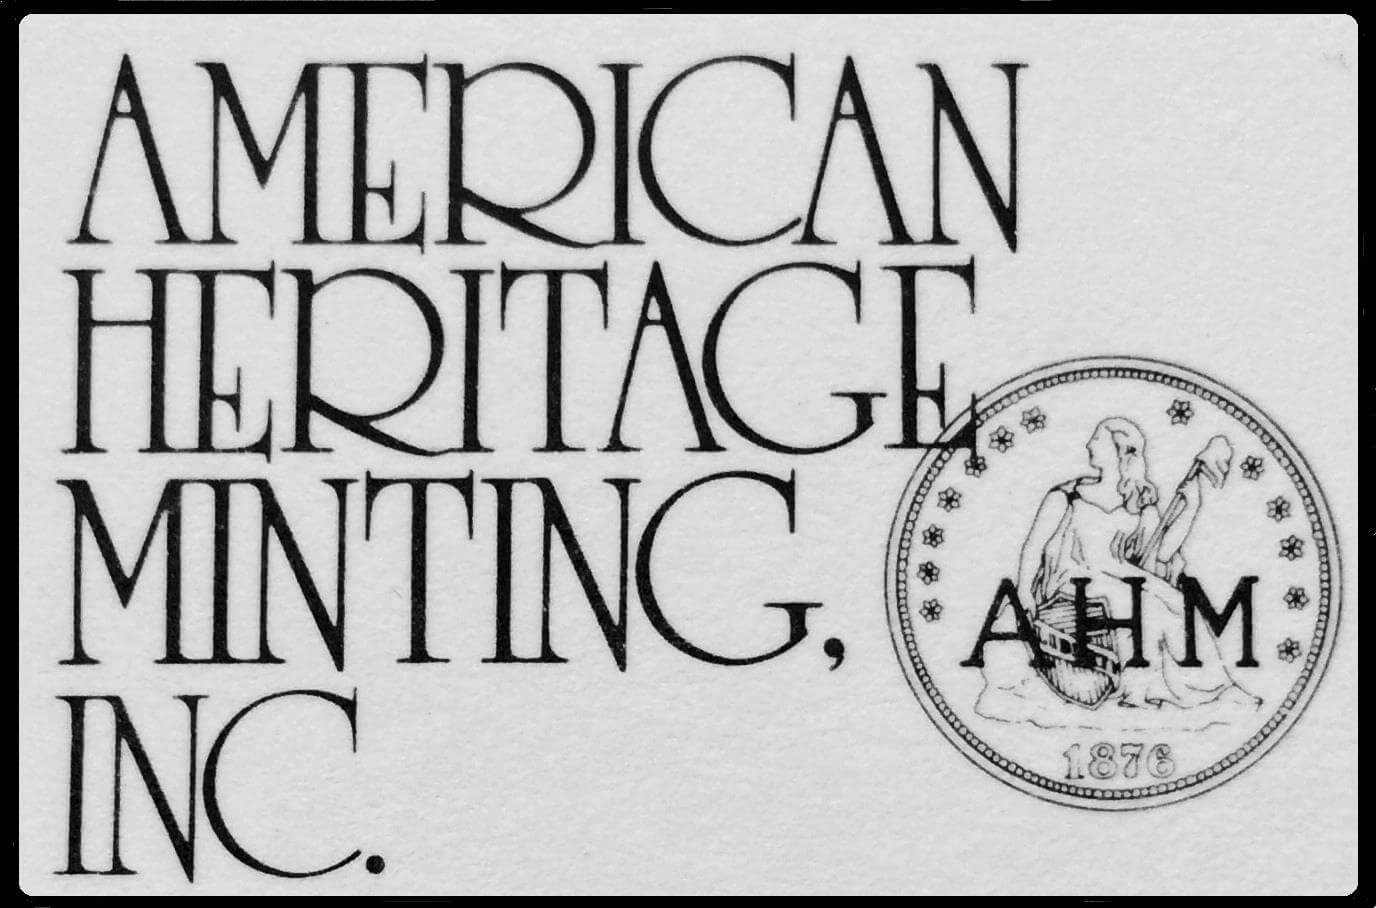 American Heritage Minting, Inc.